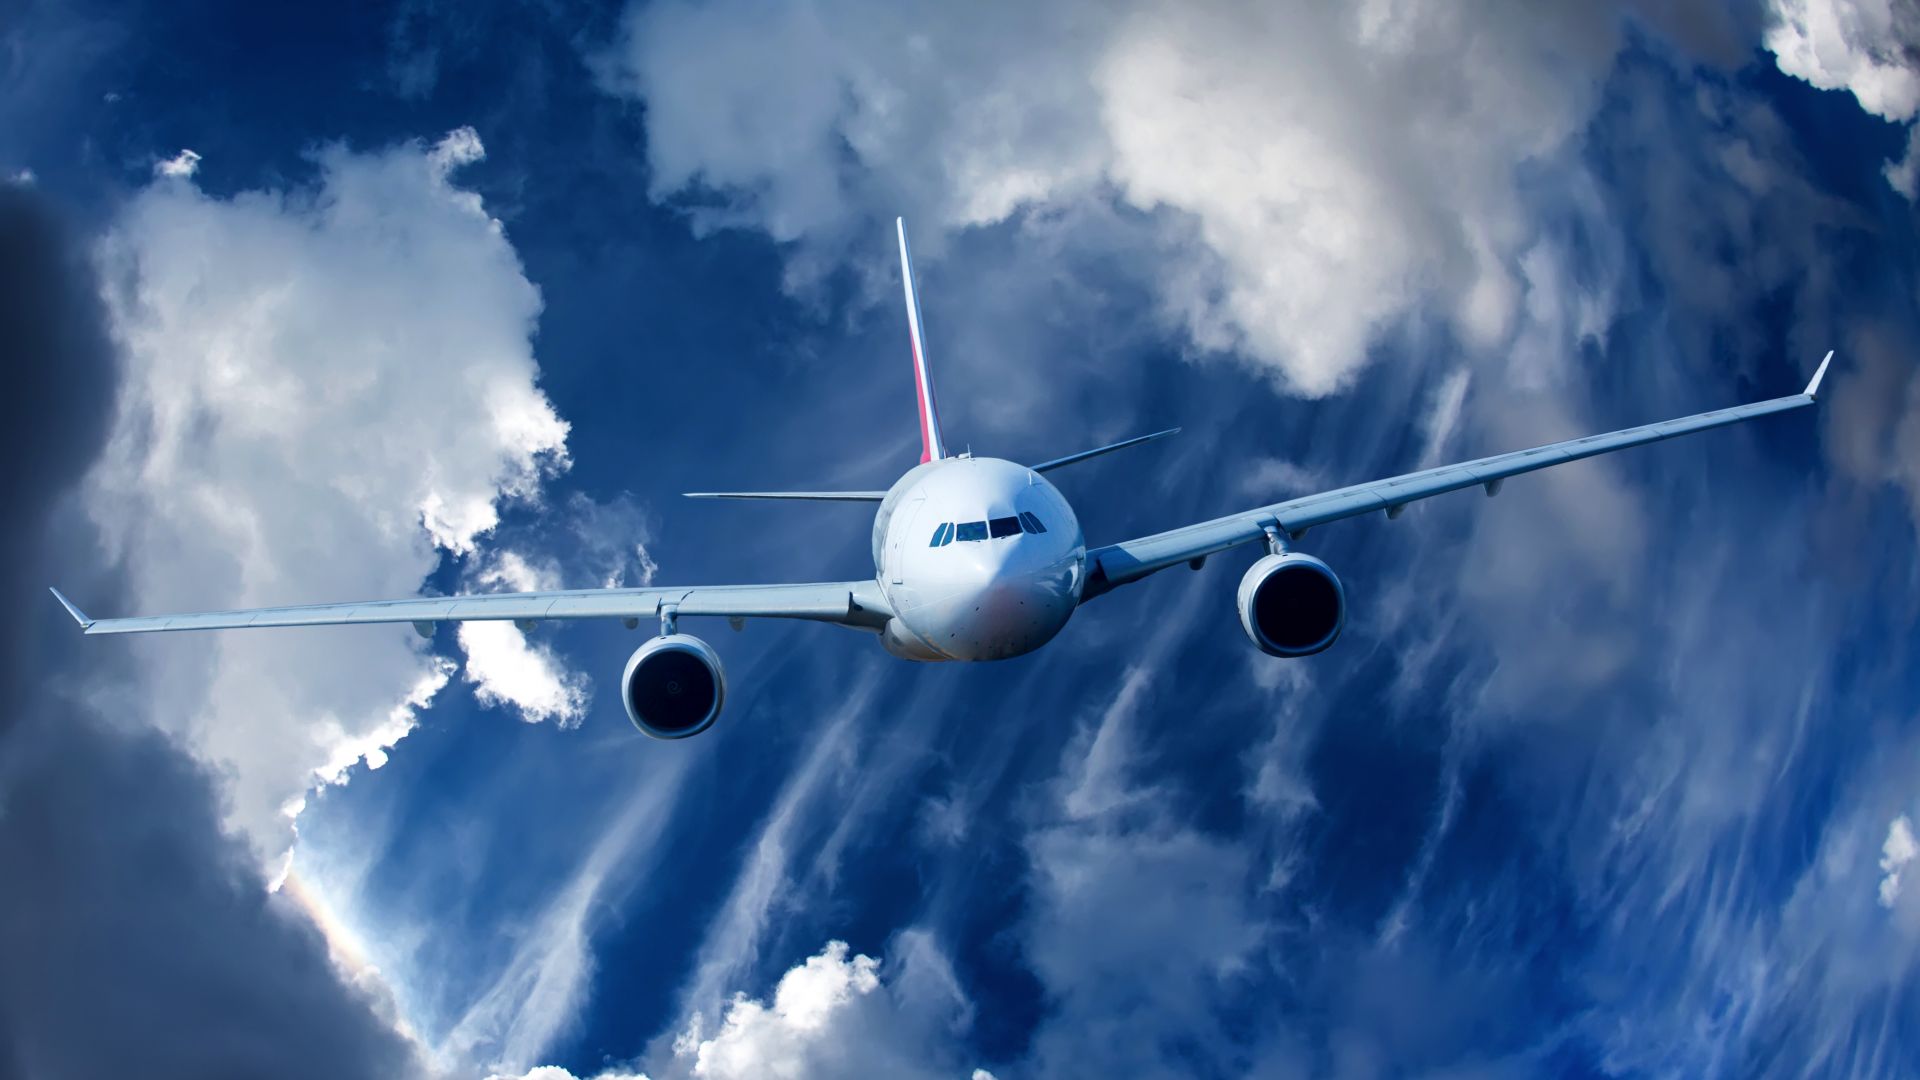 Wallpaper Clouds, sky, airplane, passenger plane